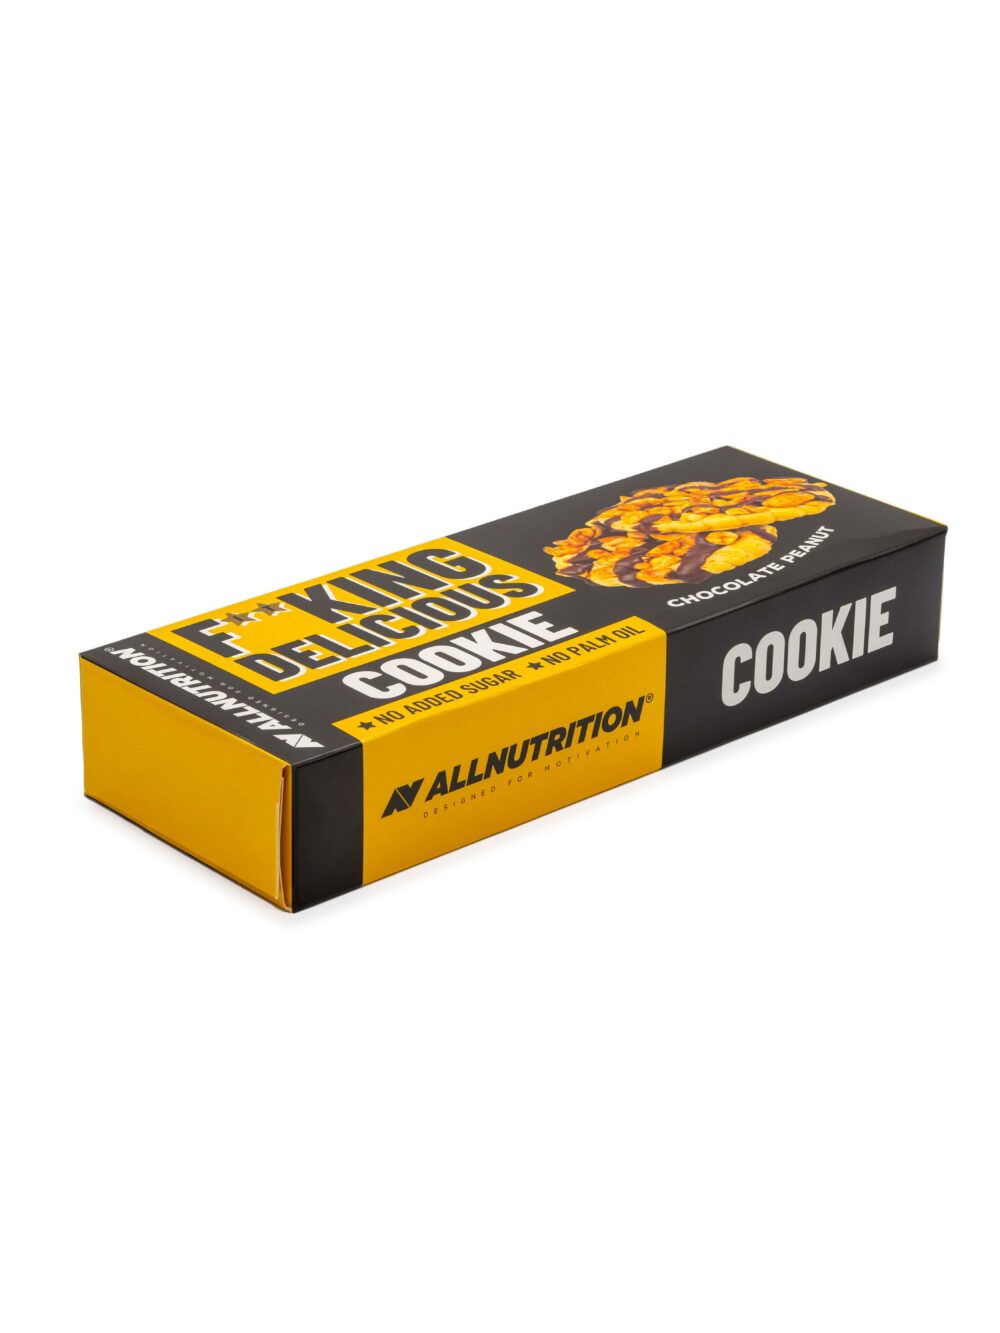 5902837740973 AllNutrition Cookie CHocolate Penaut BOX min scaled